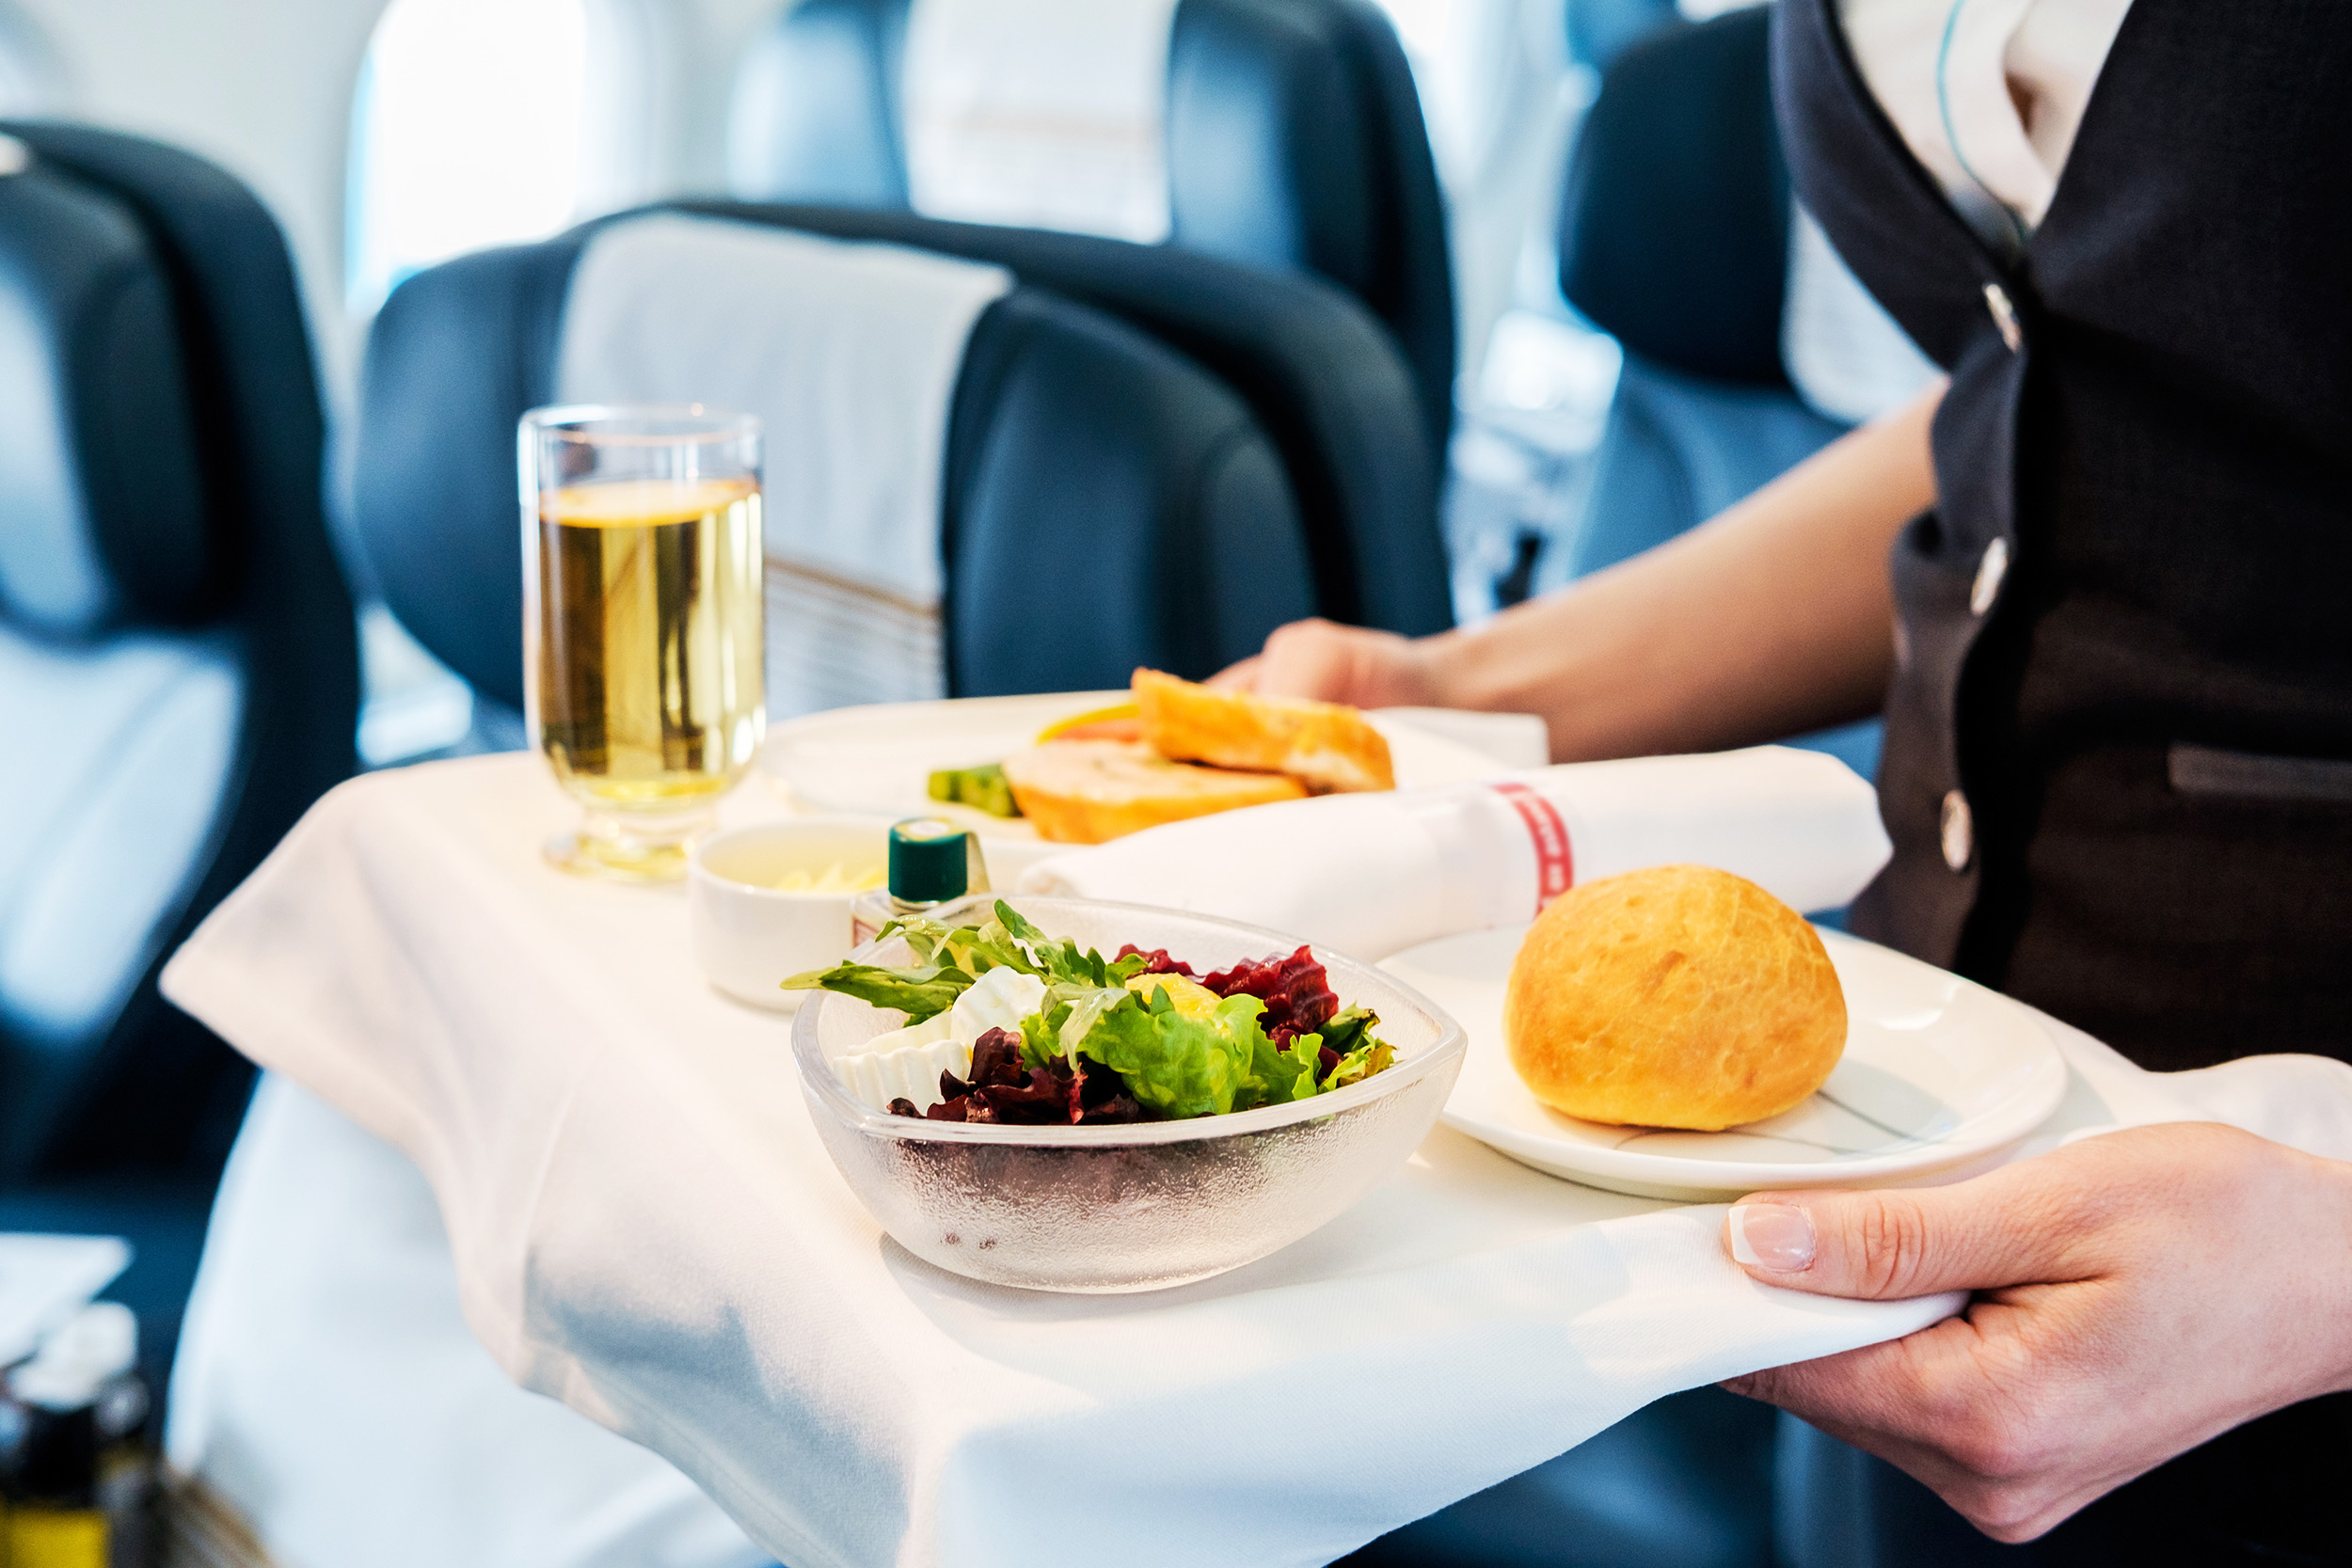 Еду по россии еду до конца. Еда в самолете. Обед в самолете. Еда на борту самолета. Завтрак в самолете.